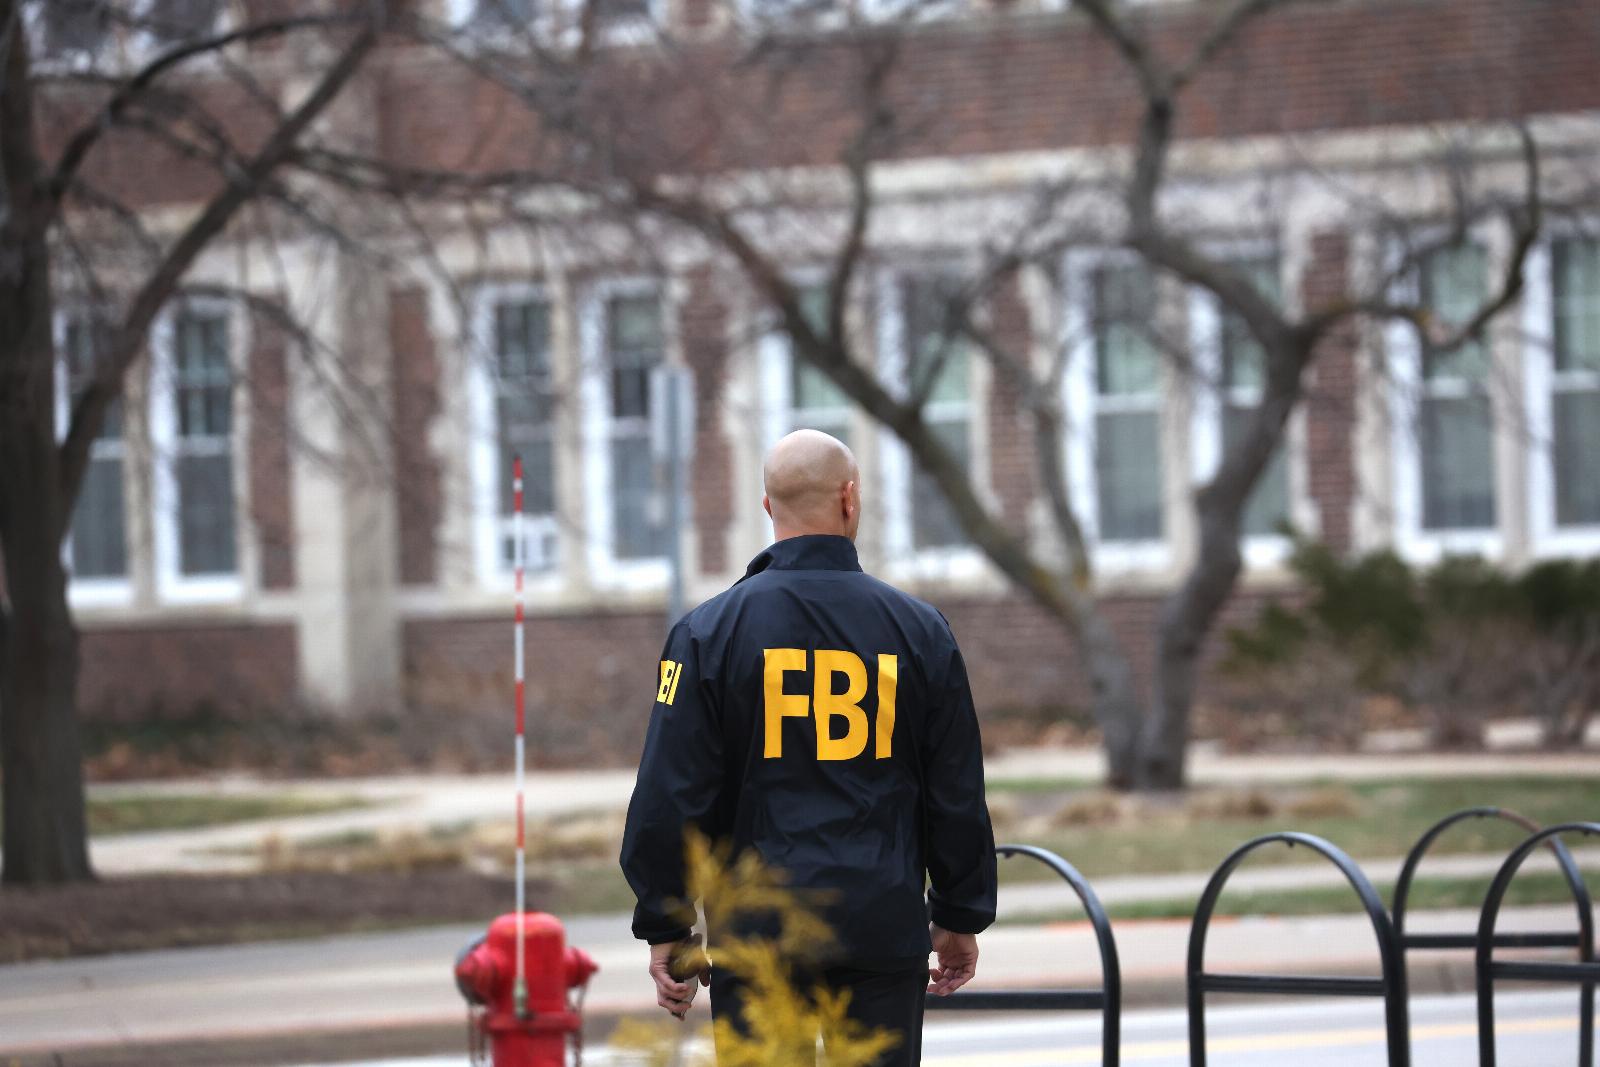 How the FBI caught the BreachForums admin